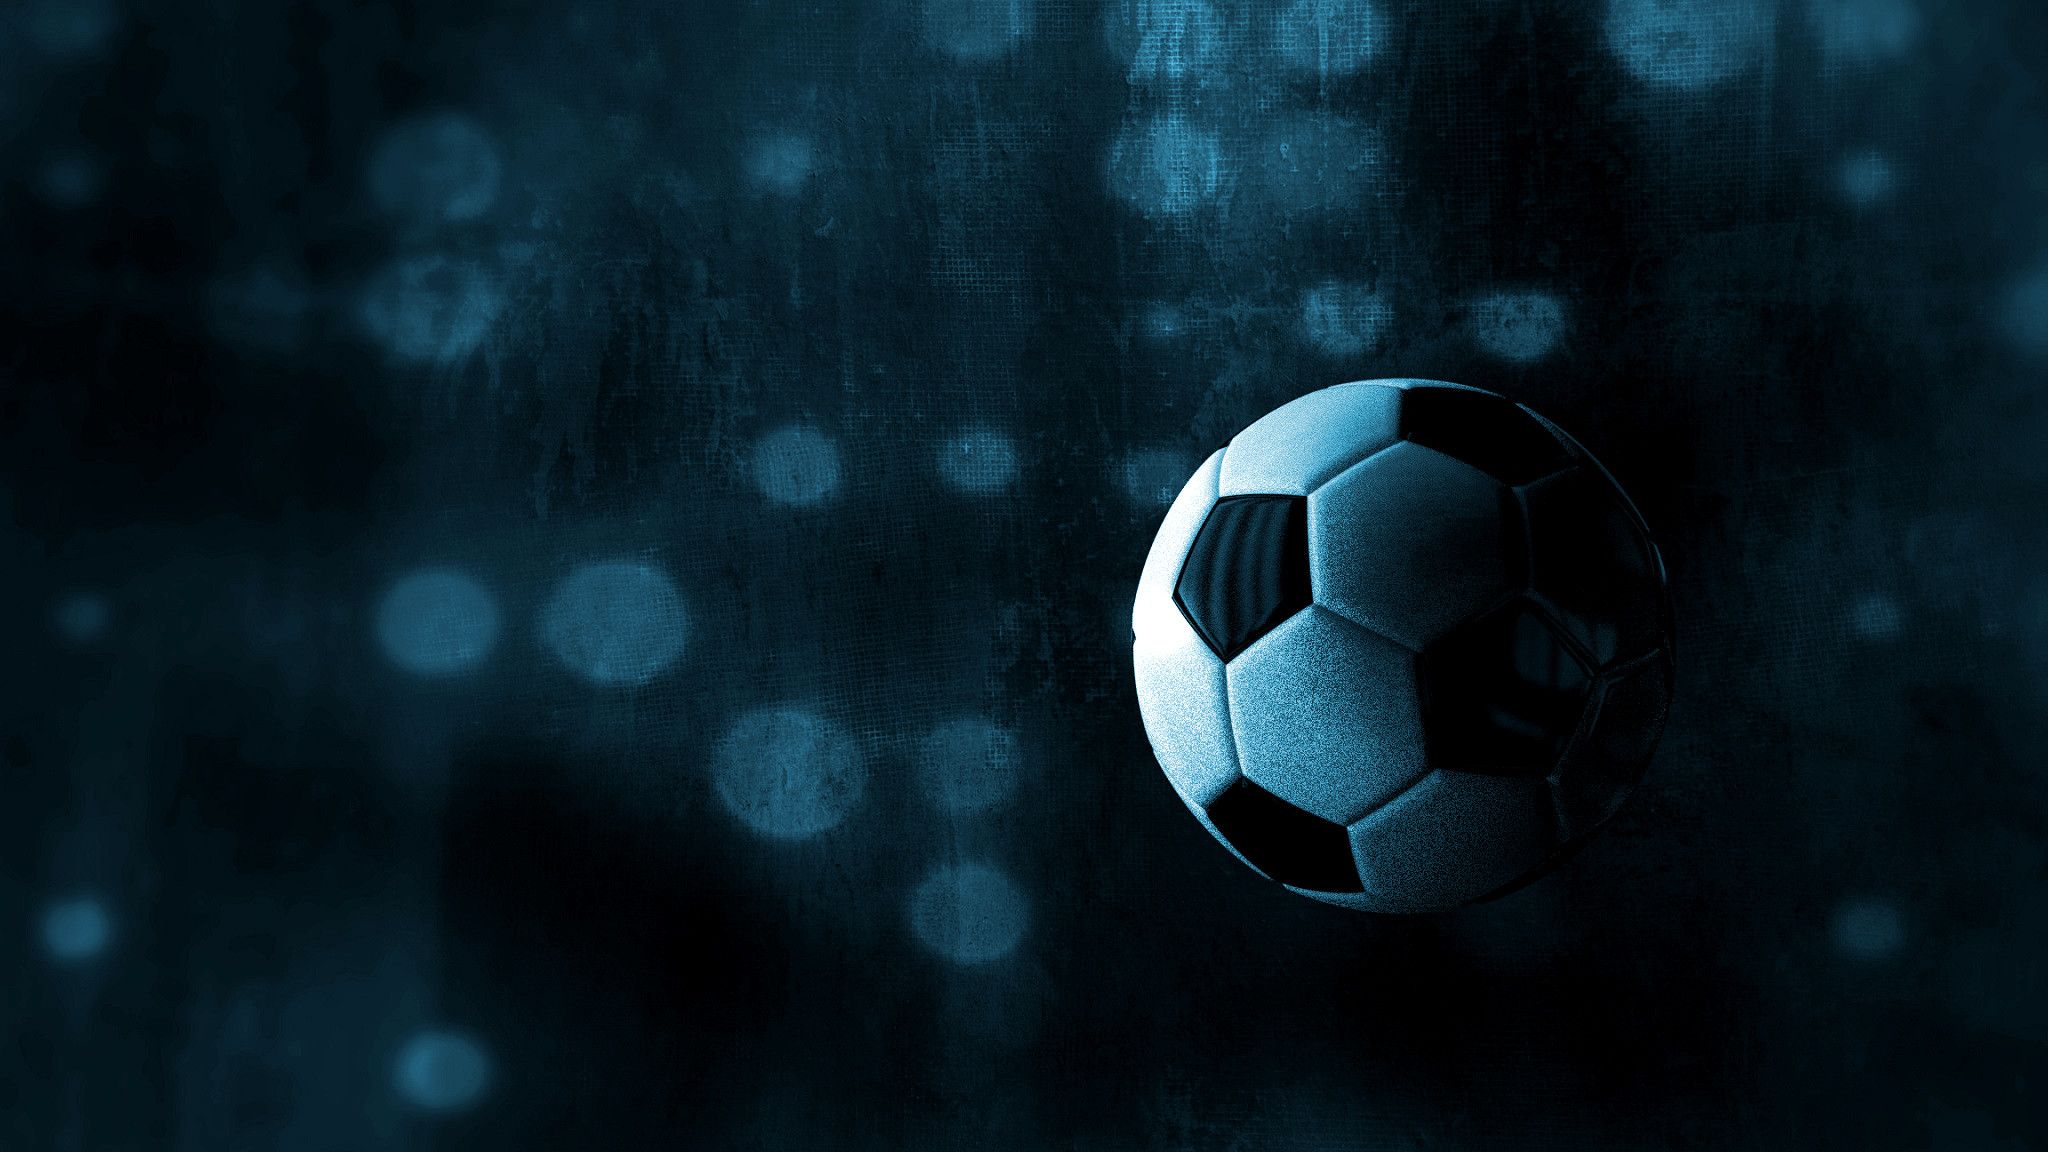 HD wallpaper: Football, white and black soccer ball, Sports, Play, Game,  blackandwhite | Wallpaper Flare